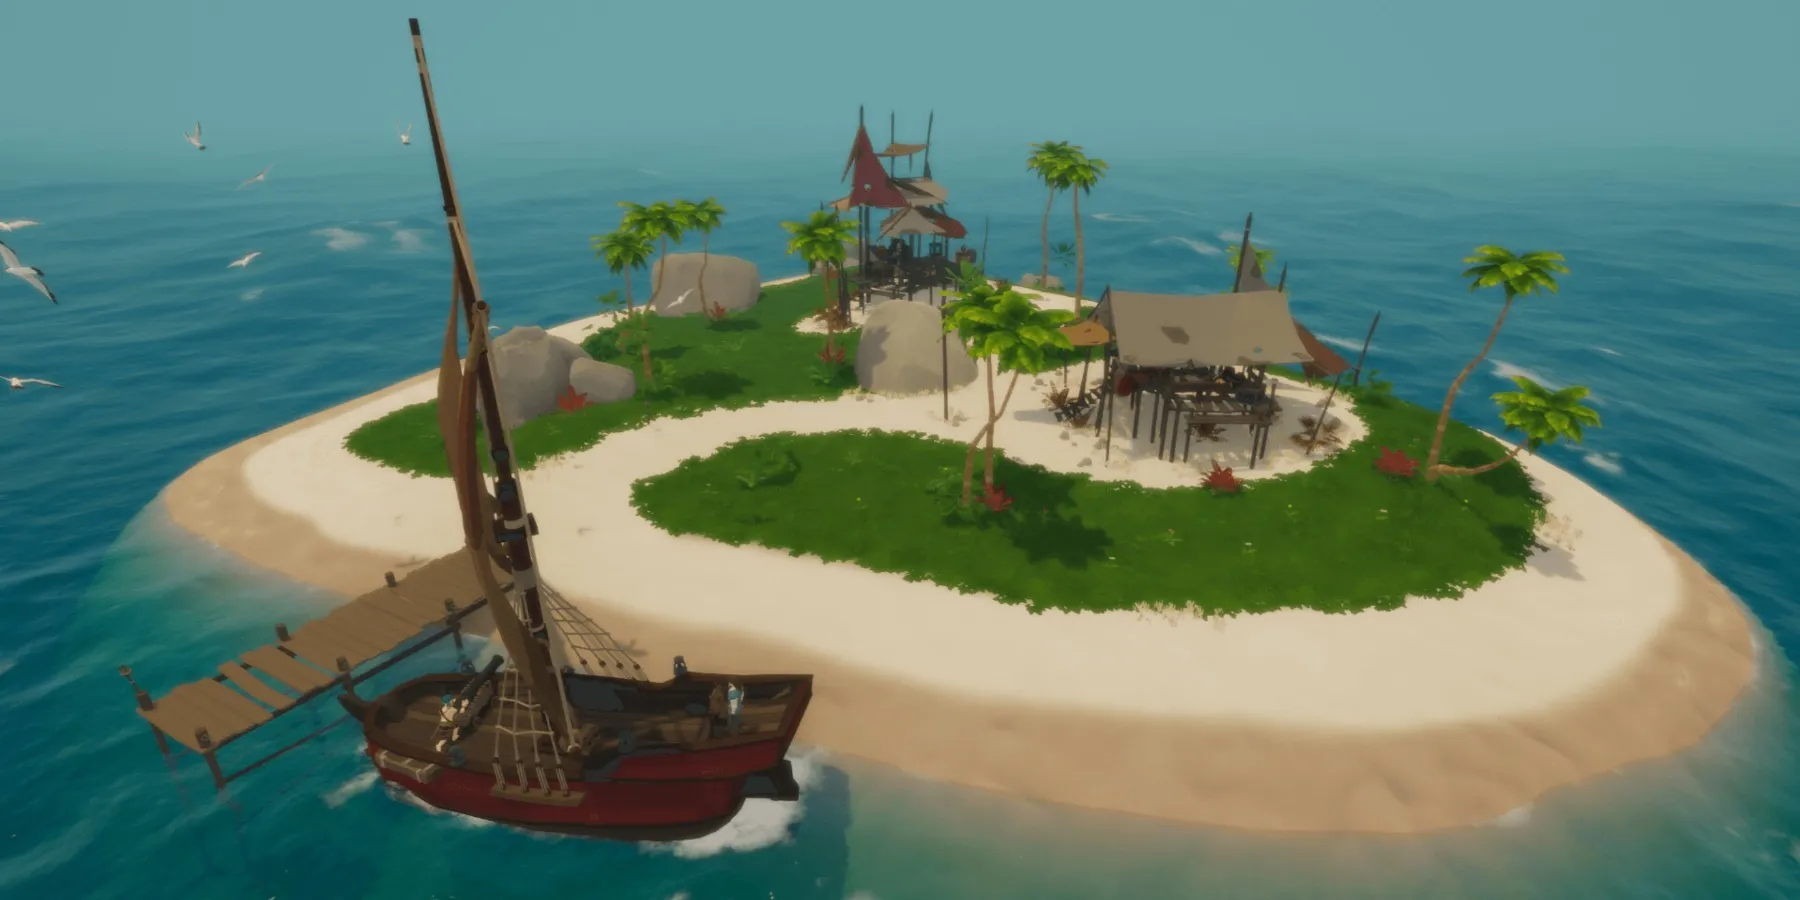 Captain Bones: El viaje de un pirata